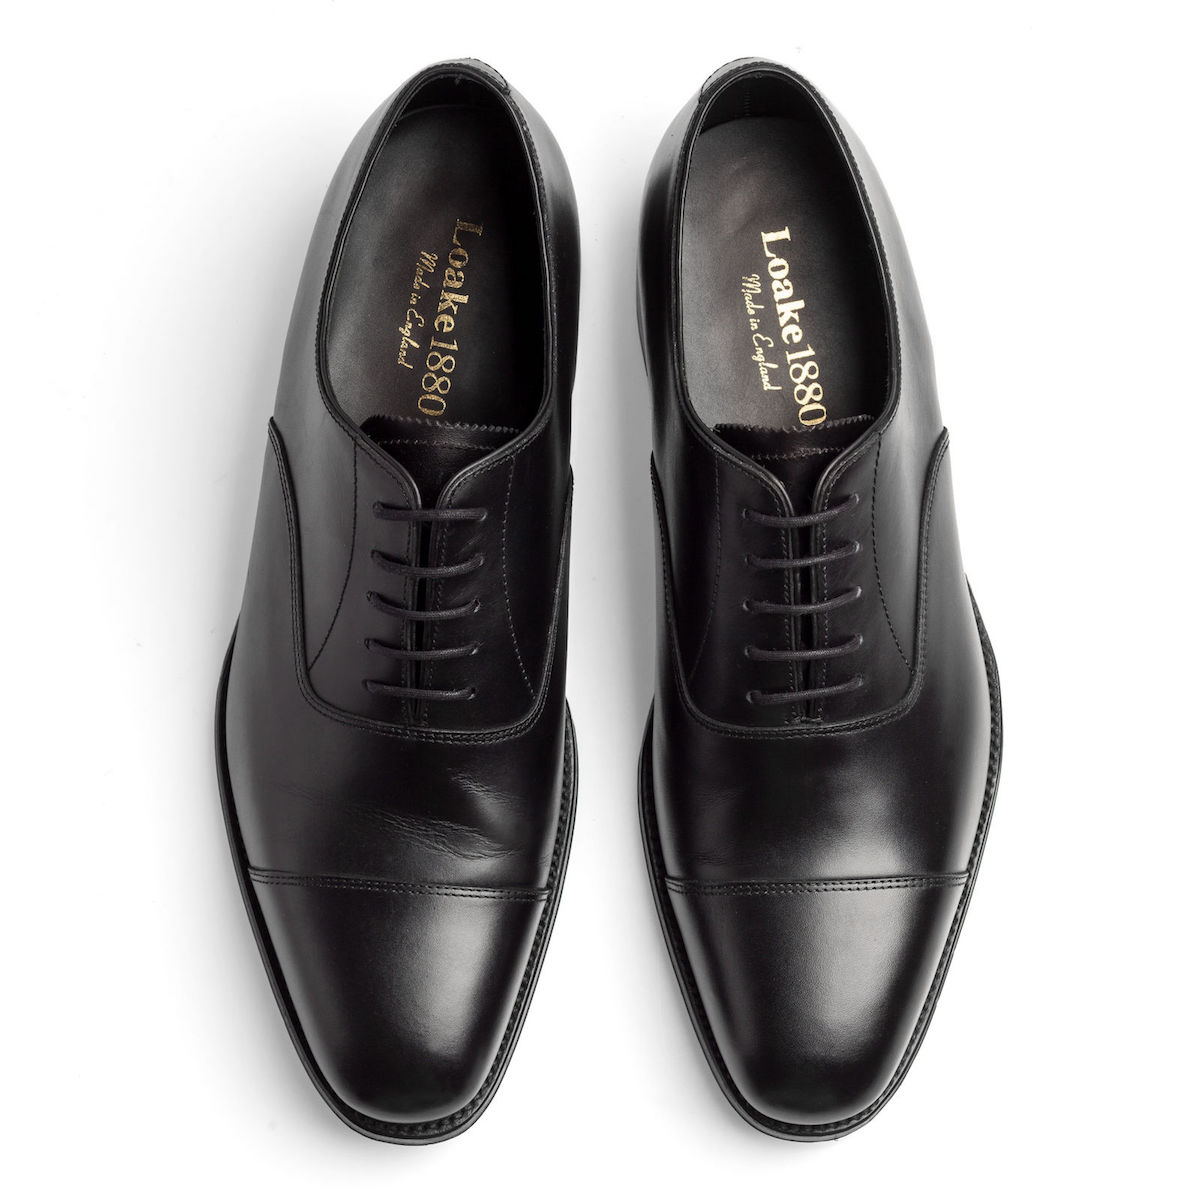 Туфли мужские 46. Оксфорды (Oxford Shoes) обувь 2021. Туфли Loake. Английские ботинки Loake. Loake обувь черные оксфорды.